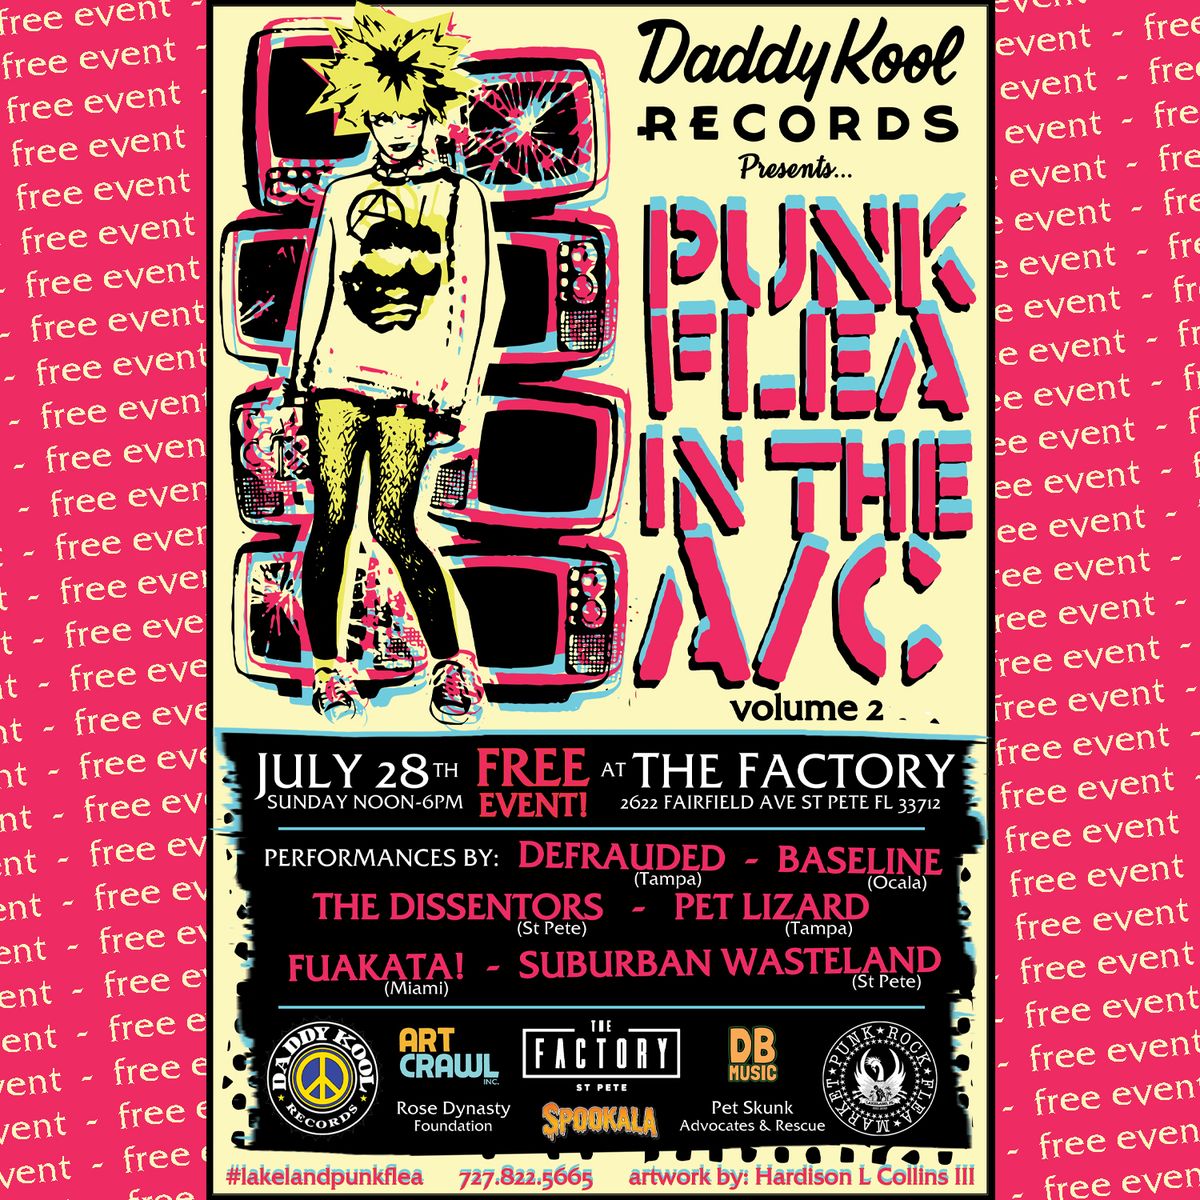 Daddy Kool Records present: PUNK FLEA in the AC Vol:2